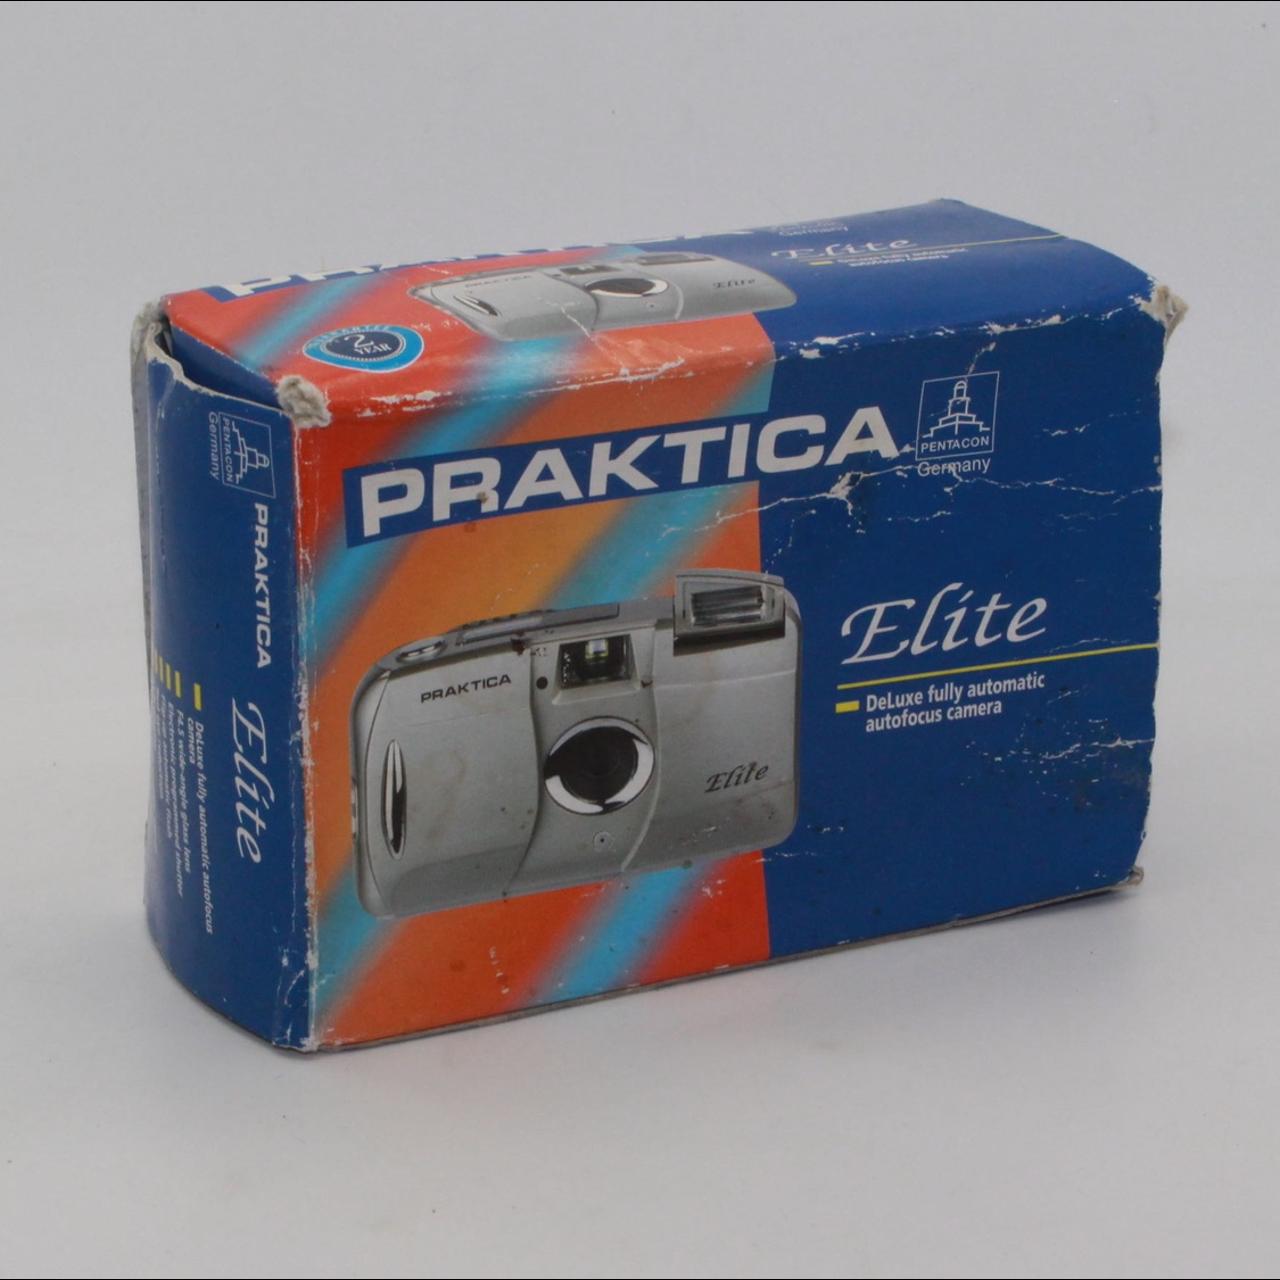 Product Image 3 - Meet the Praktica Elite, an